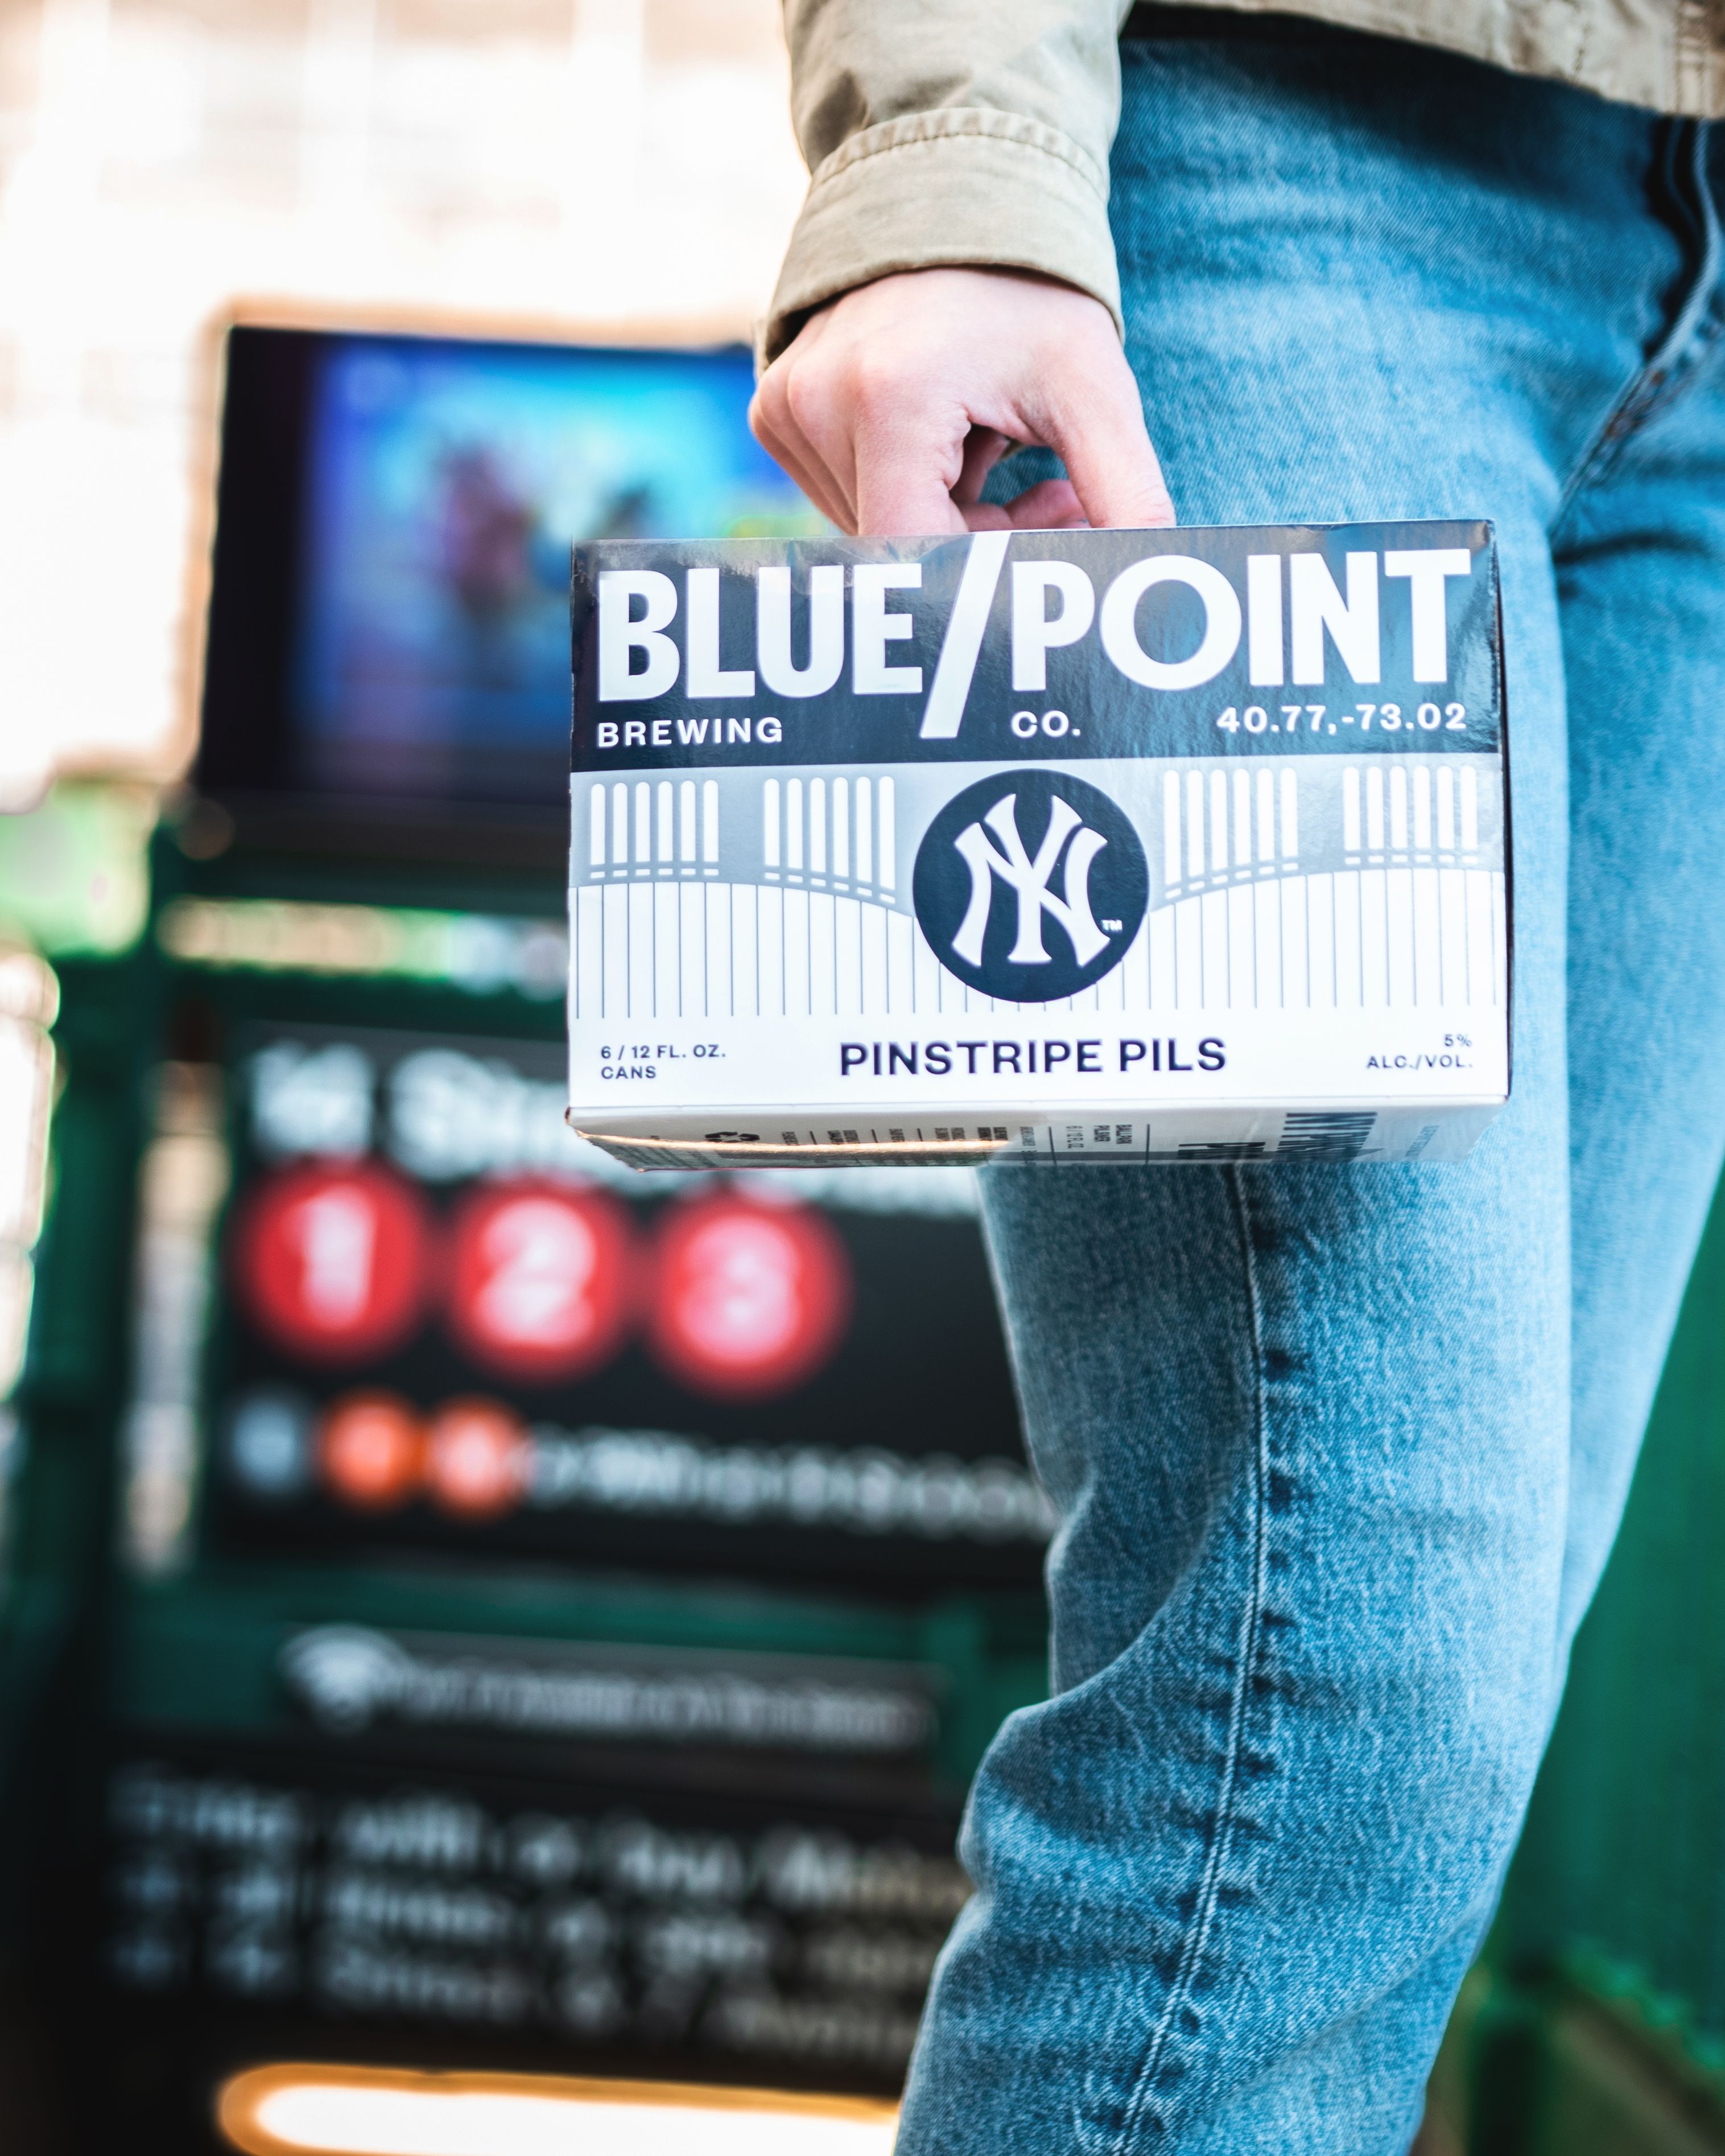 Pinstripe Pils / Blue Point Brewery